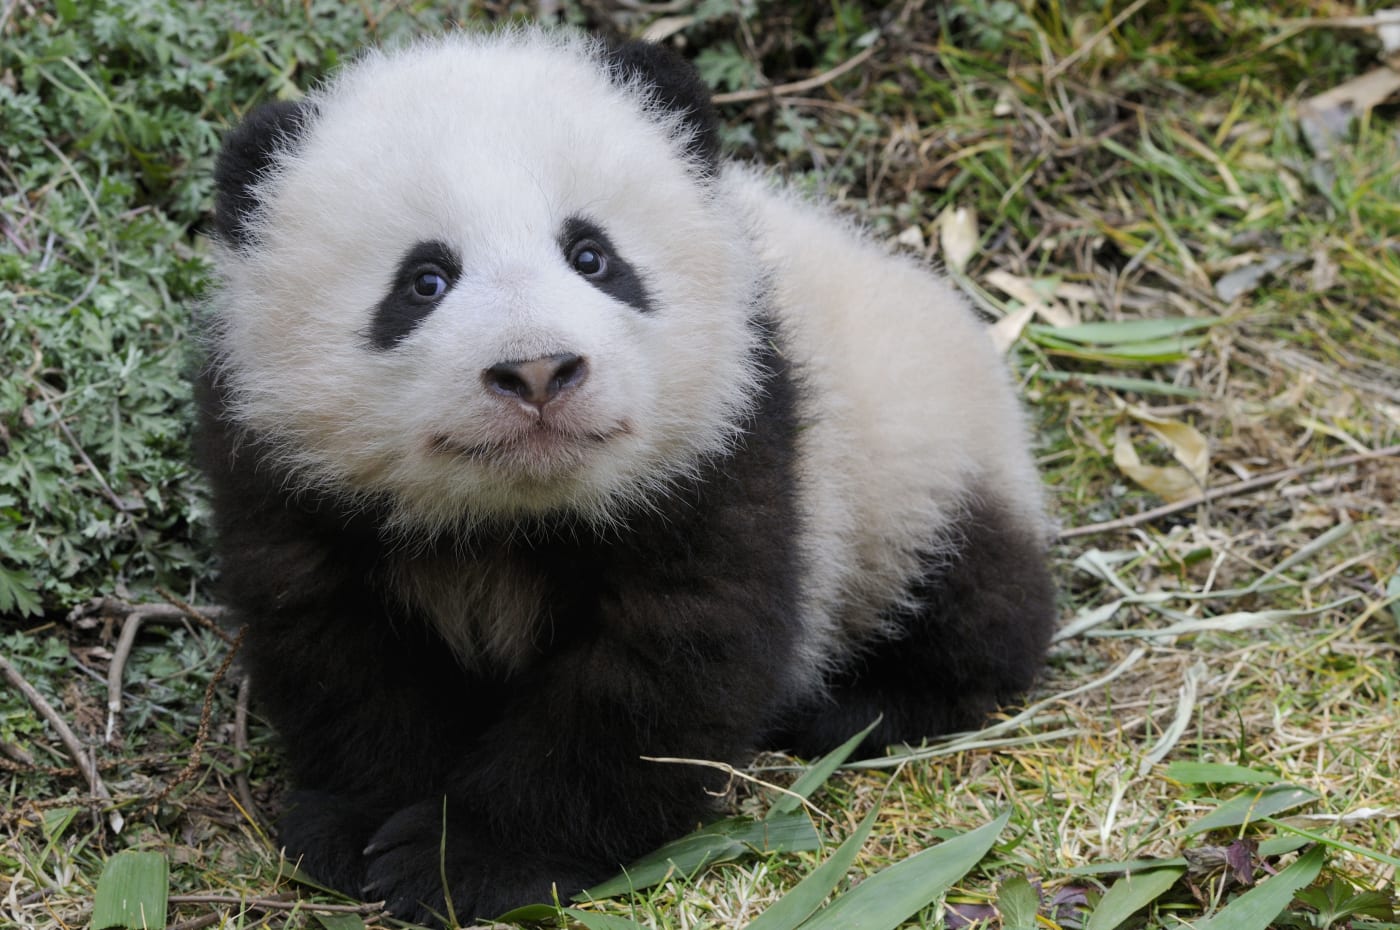 Giant panda baby (Ailuropoda melanoleuca) aged 5 months, Wolong Nature Reserve, China, Captive